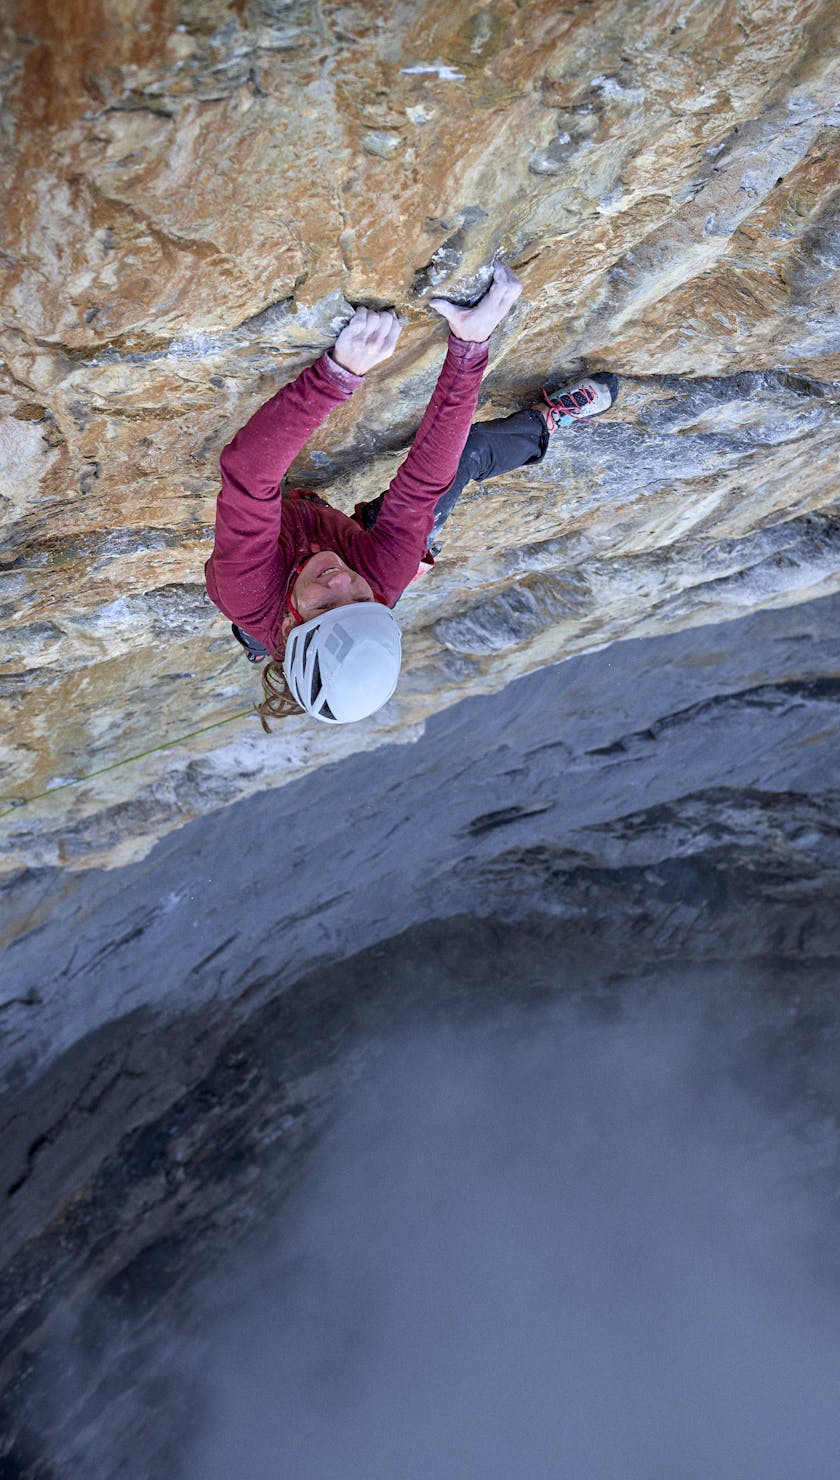 Black Diamond athlete Babsi Zangerl climbing the Eiger's North Face